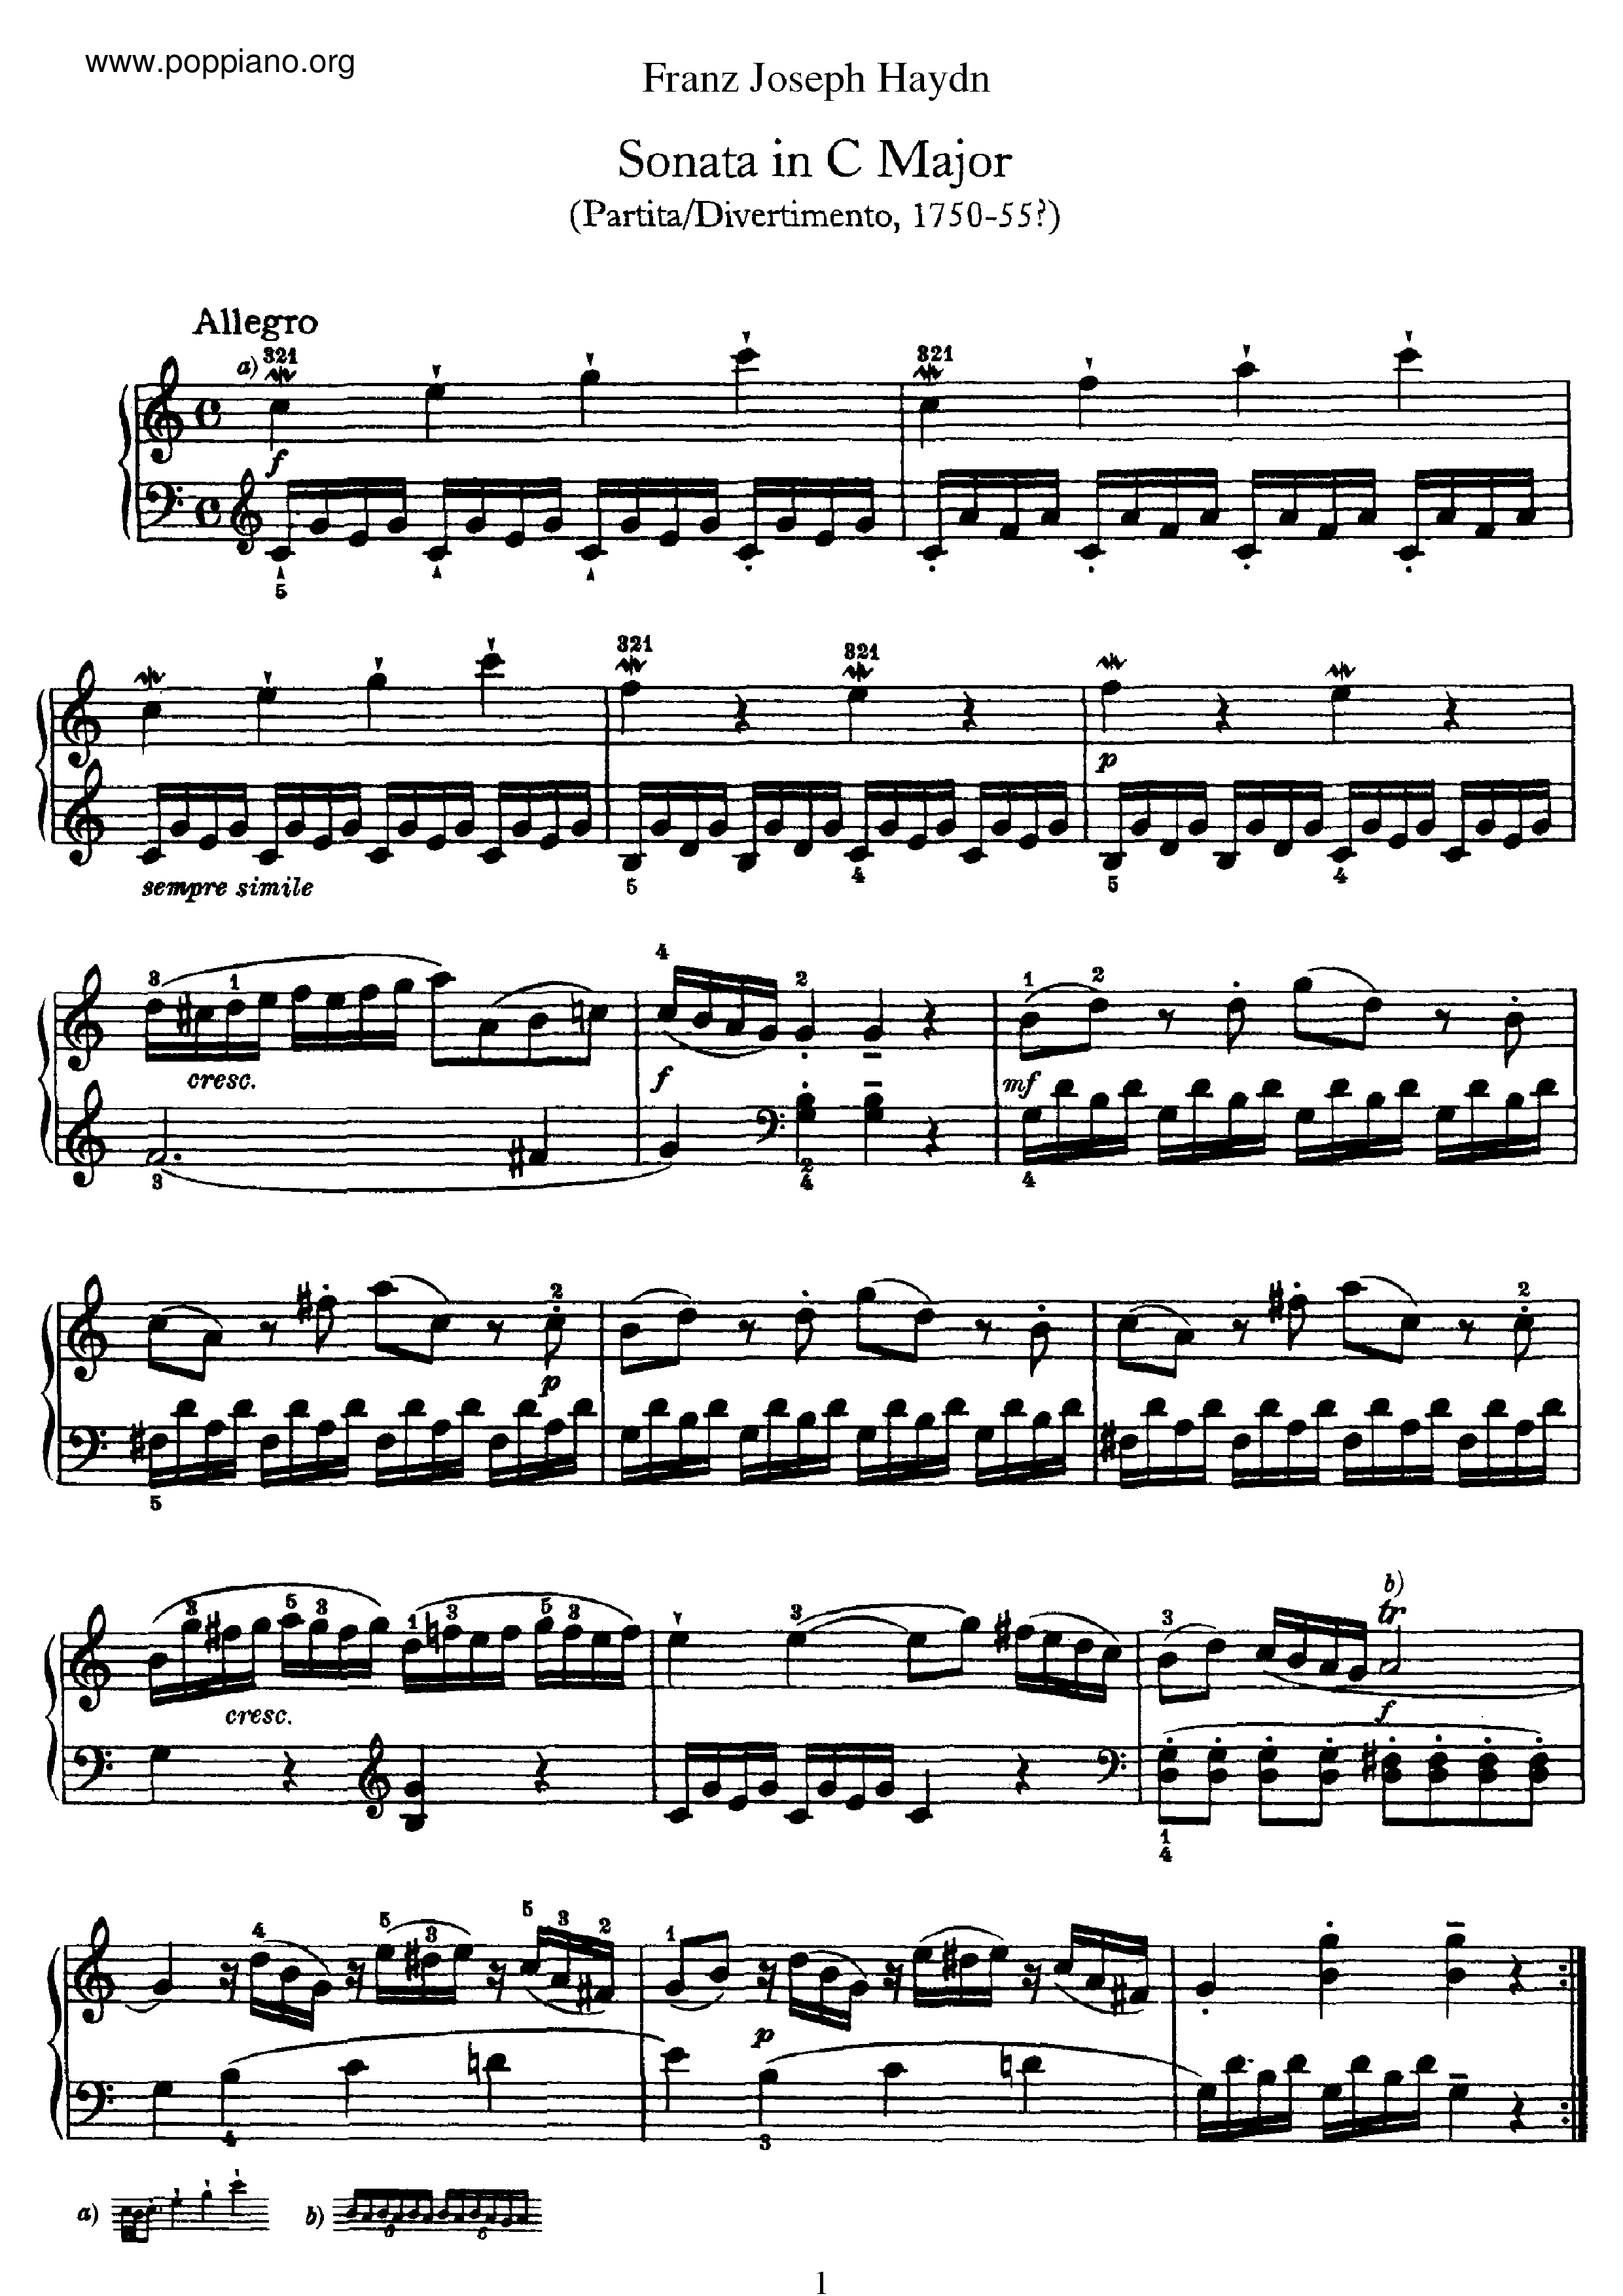 Sonata No.1 in C majorピアノ譜